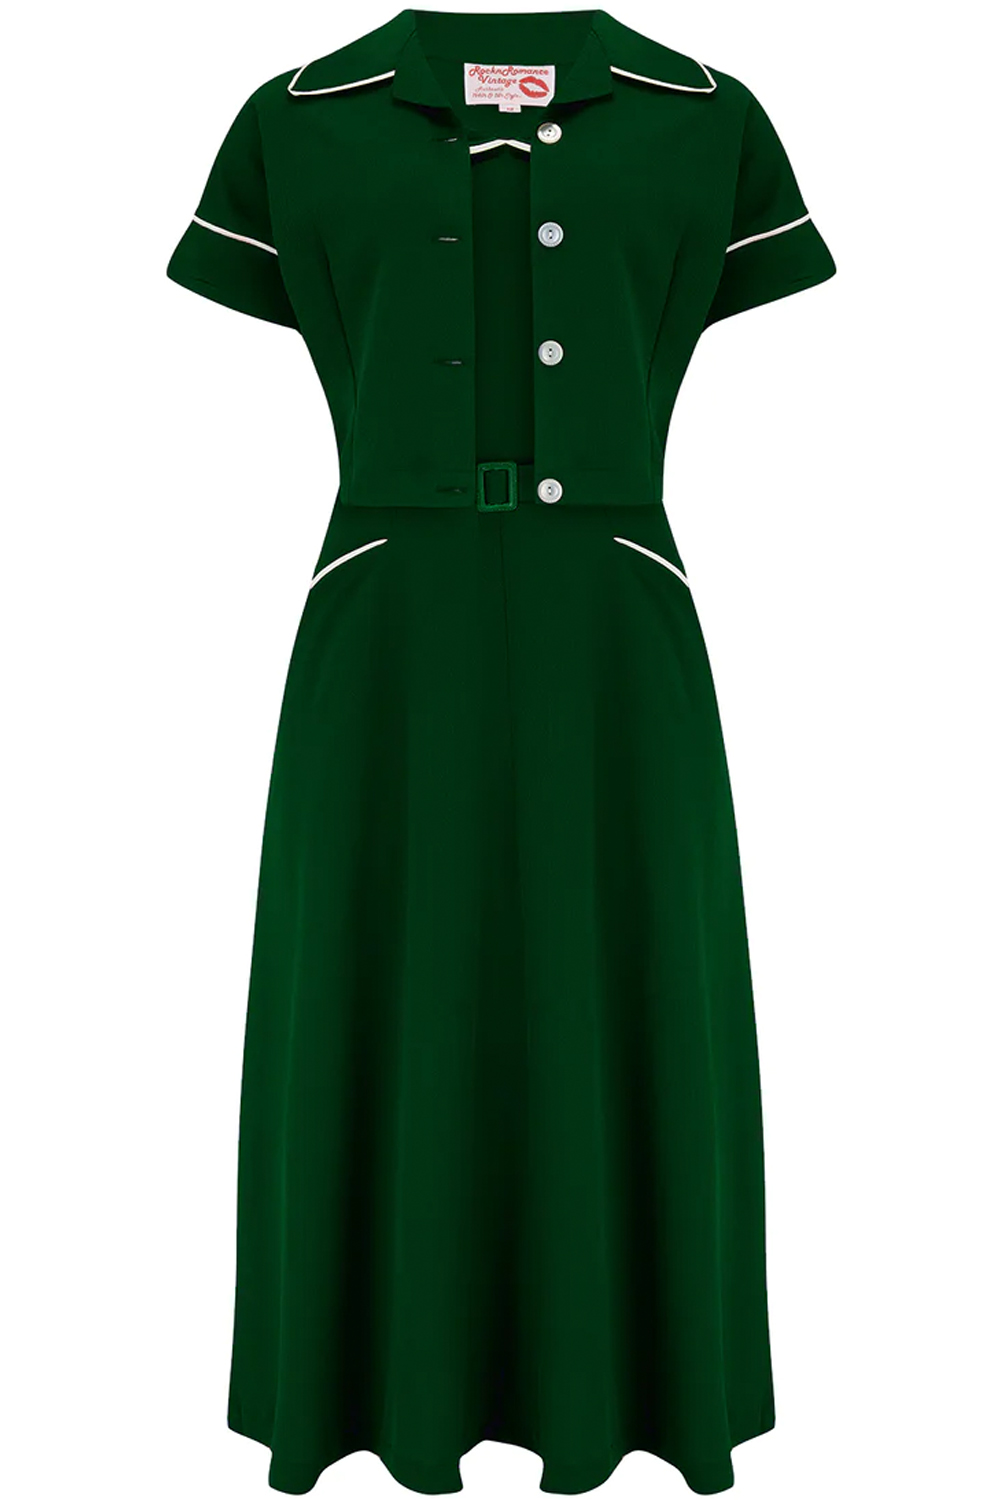 40er Jahre retro Trägerkleid Vintage Kleid kurzarm Bolero 2-teilig grün